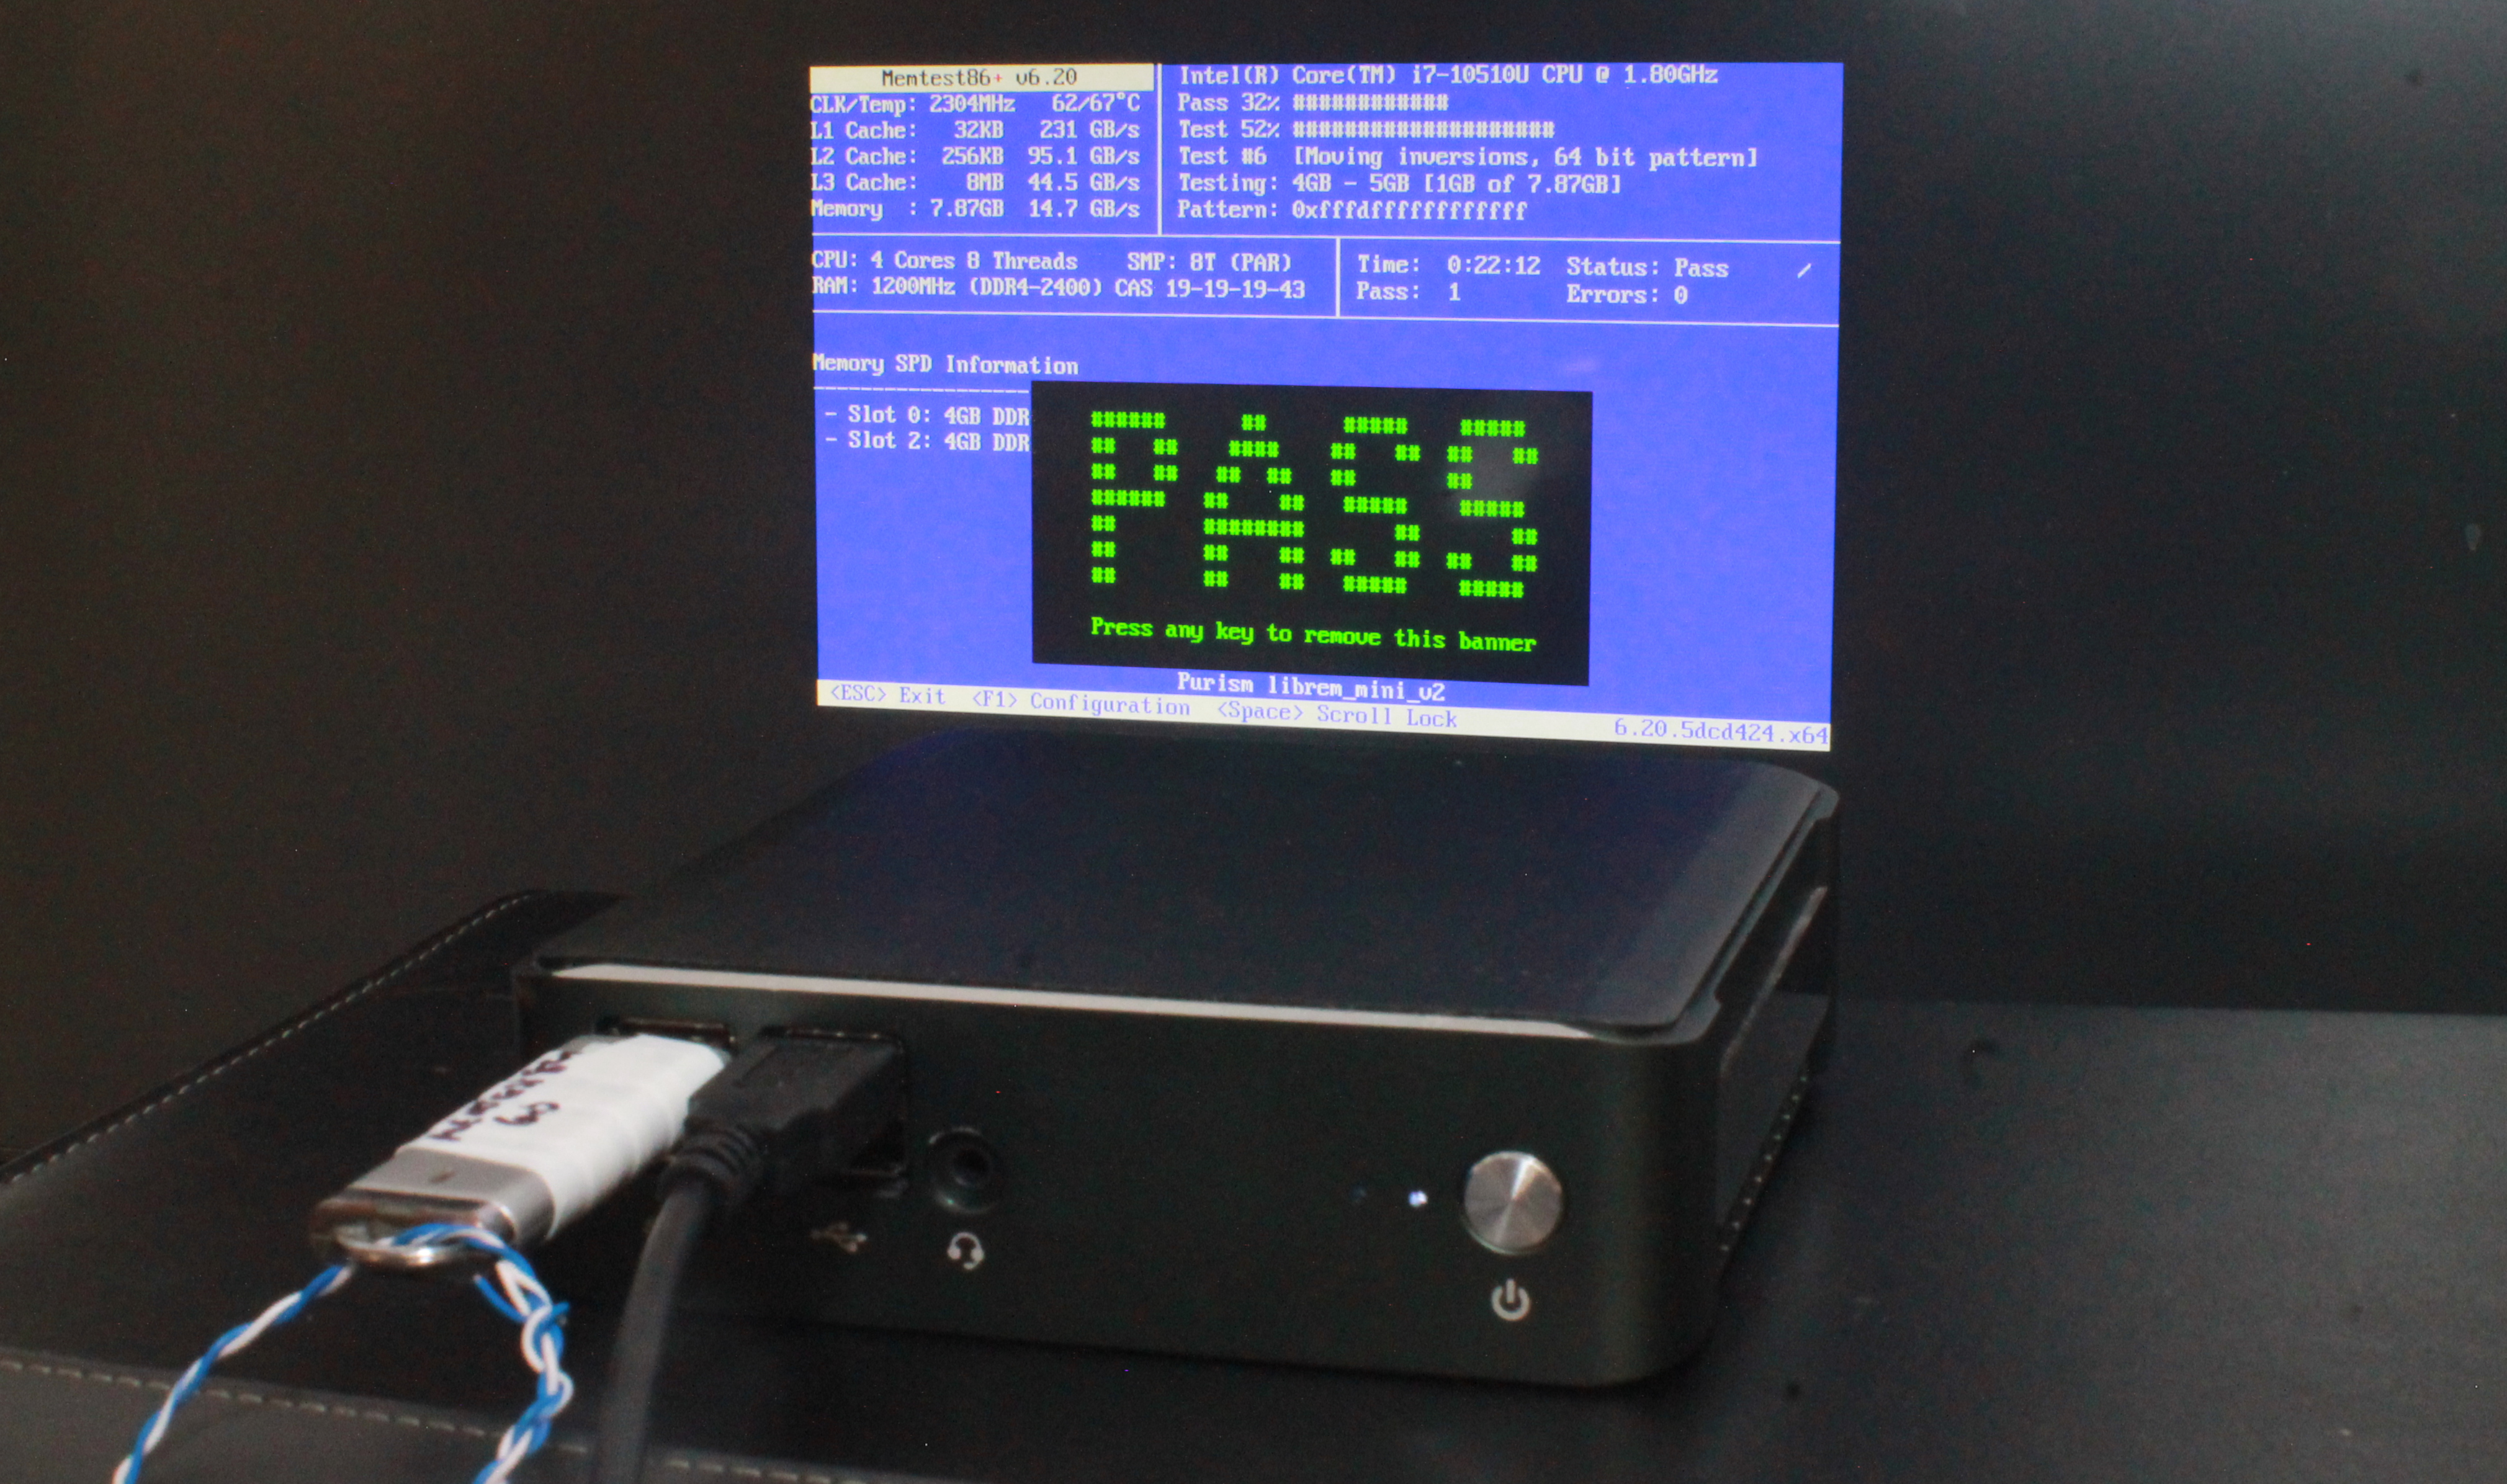 Librem Mini v2, with memtest86+ displaying "PASS"